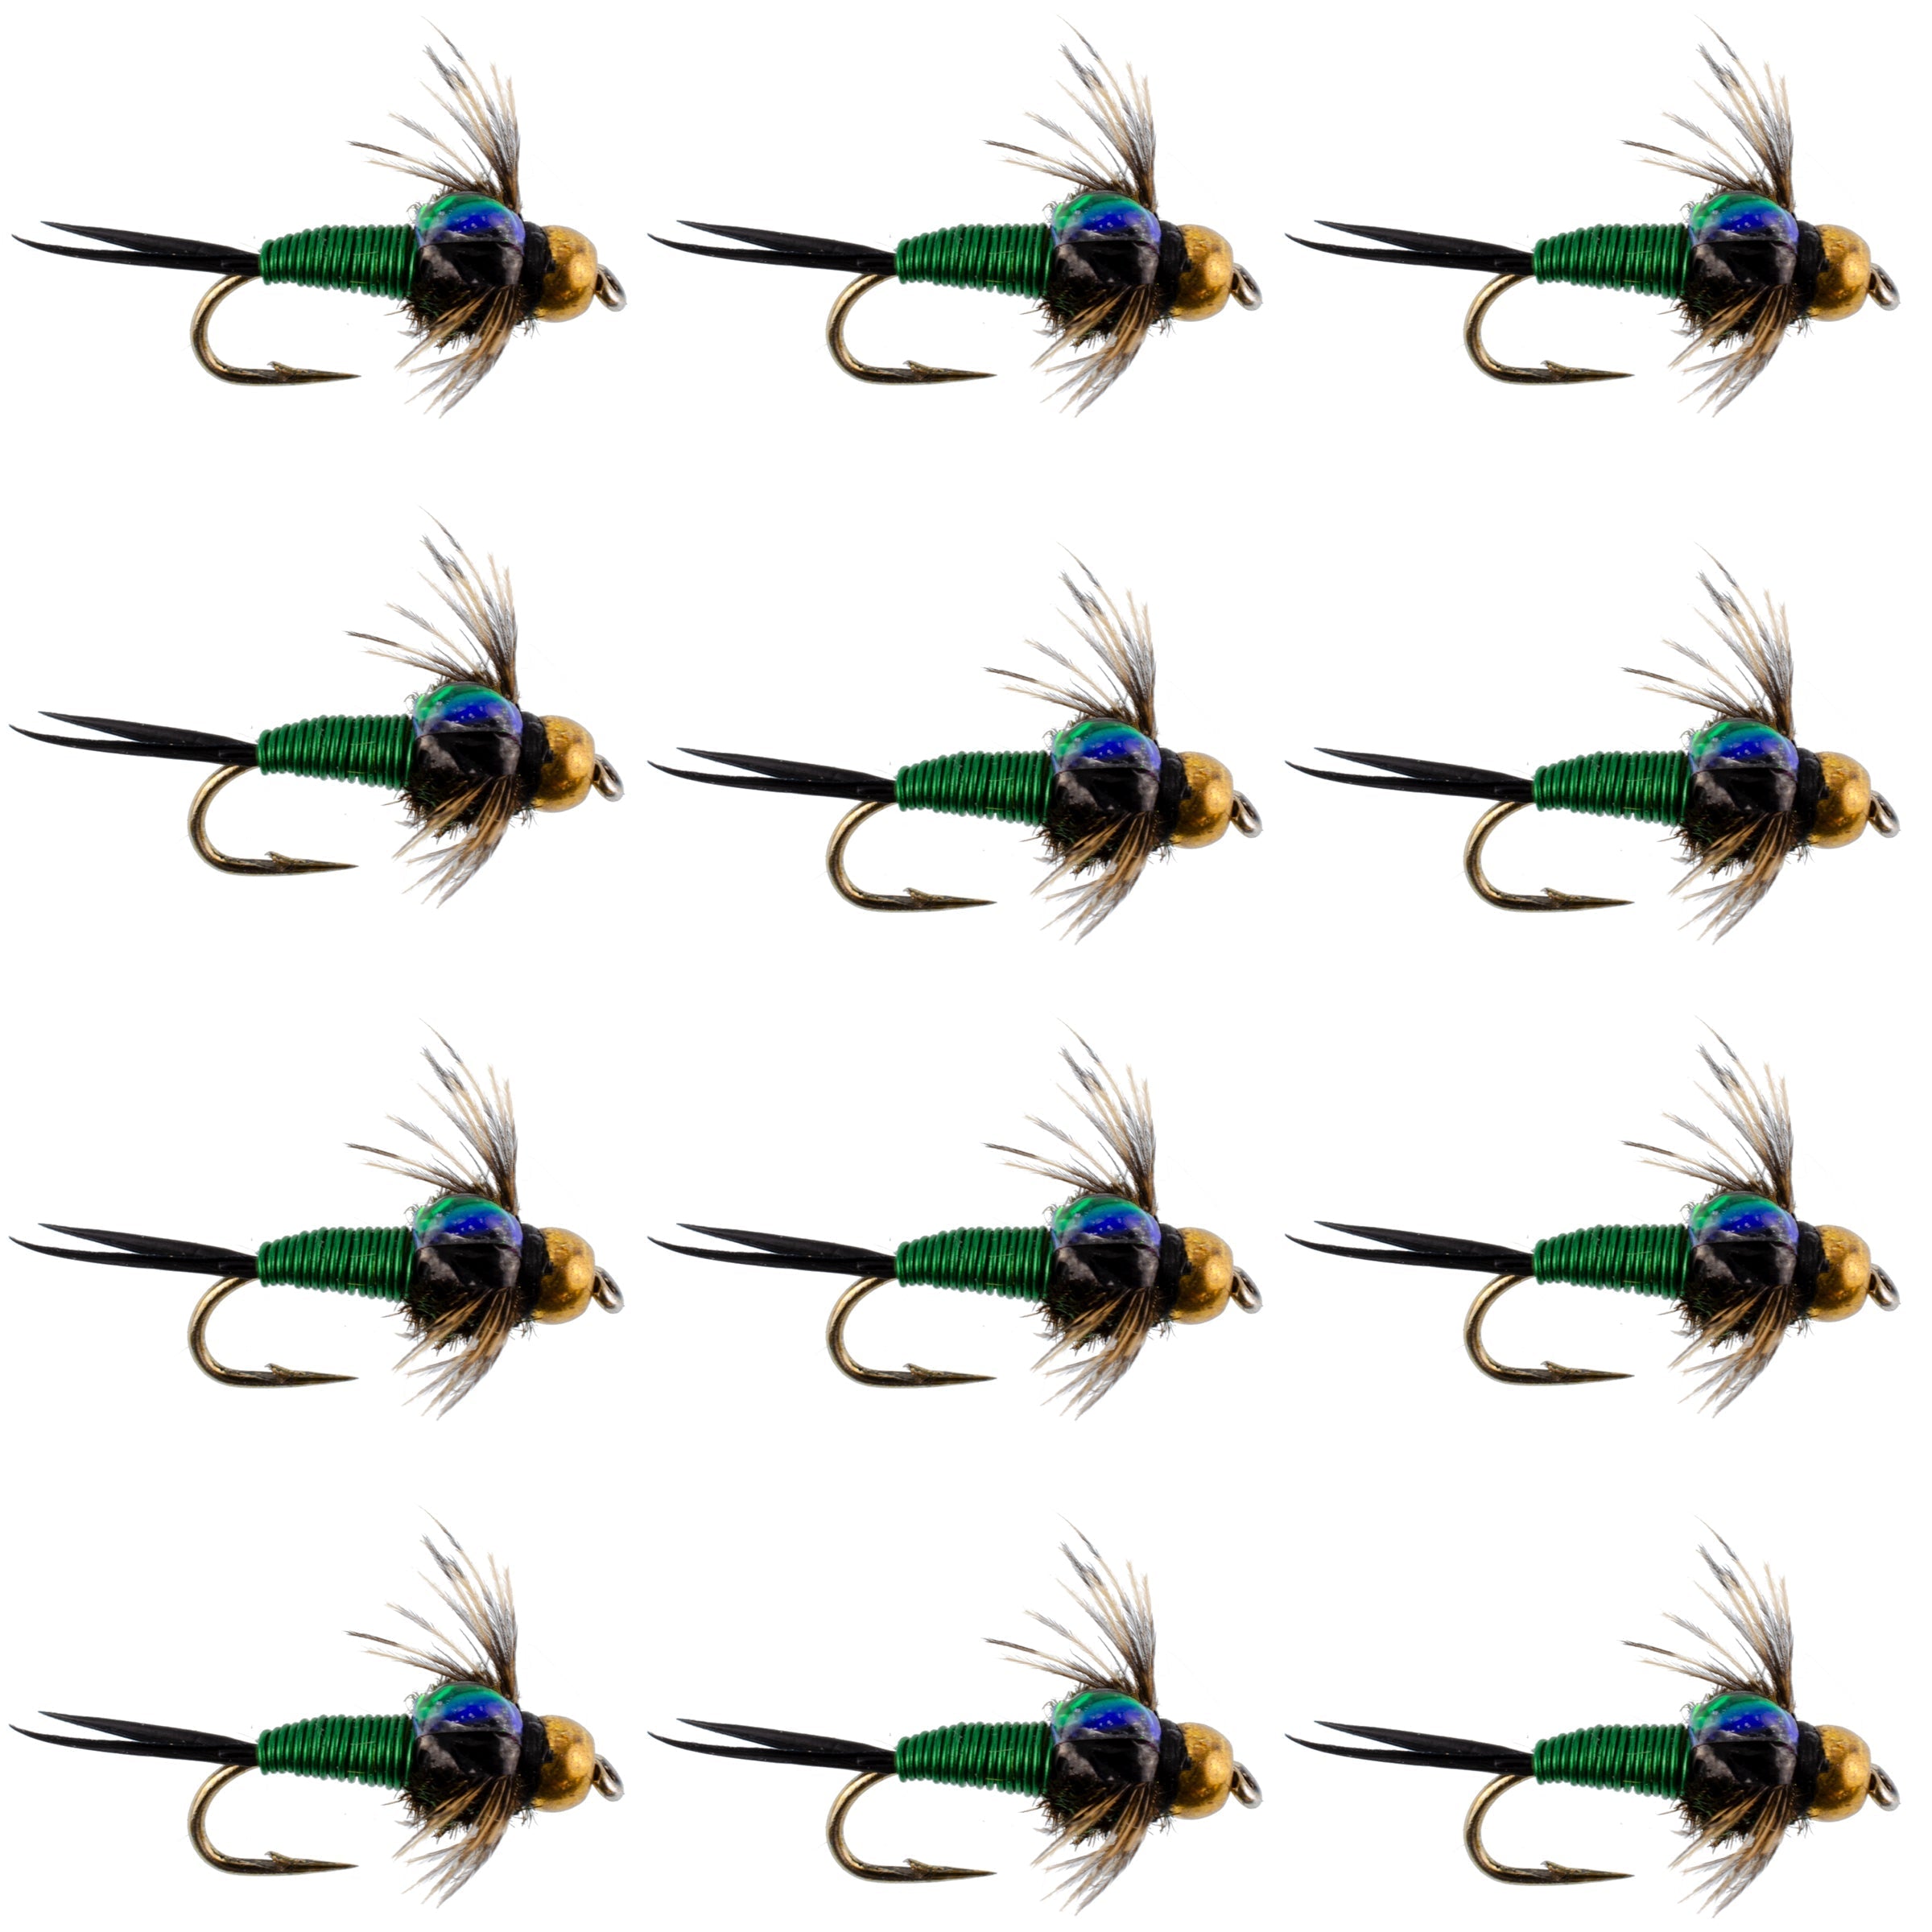 Moscas de pesca con mosca John Nymph de cobre verde con cabeza de cuentas, 1 docena de ganchos para moscas, tamaño 16